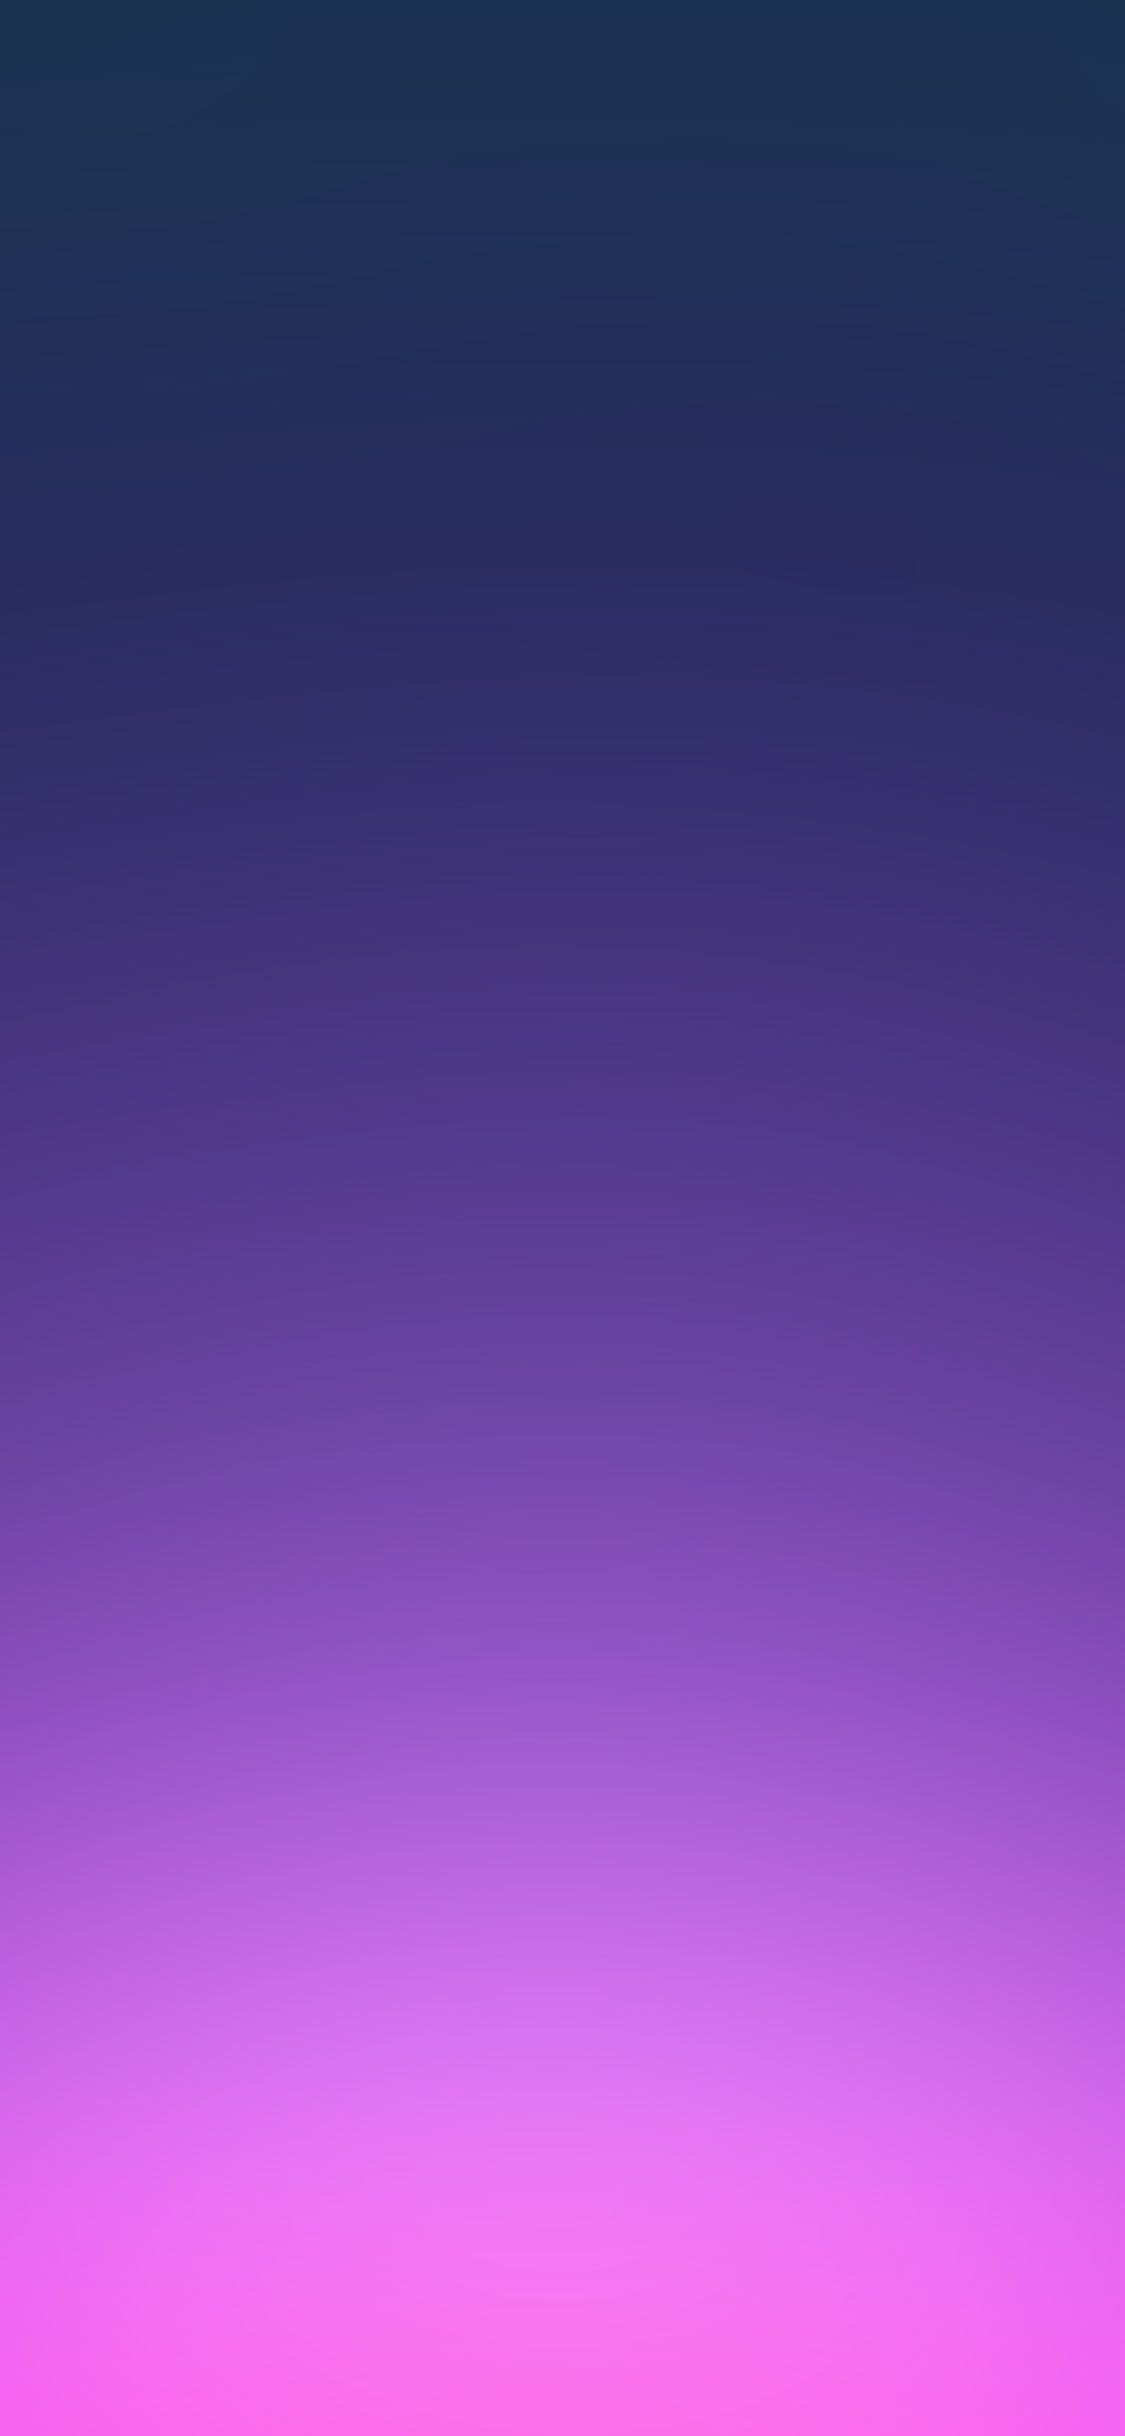 Plain Lavender Iphone Wallpapers